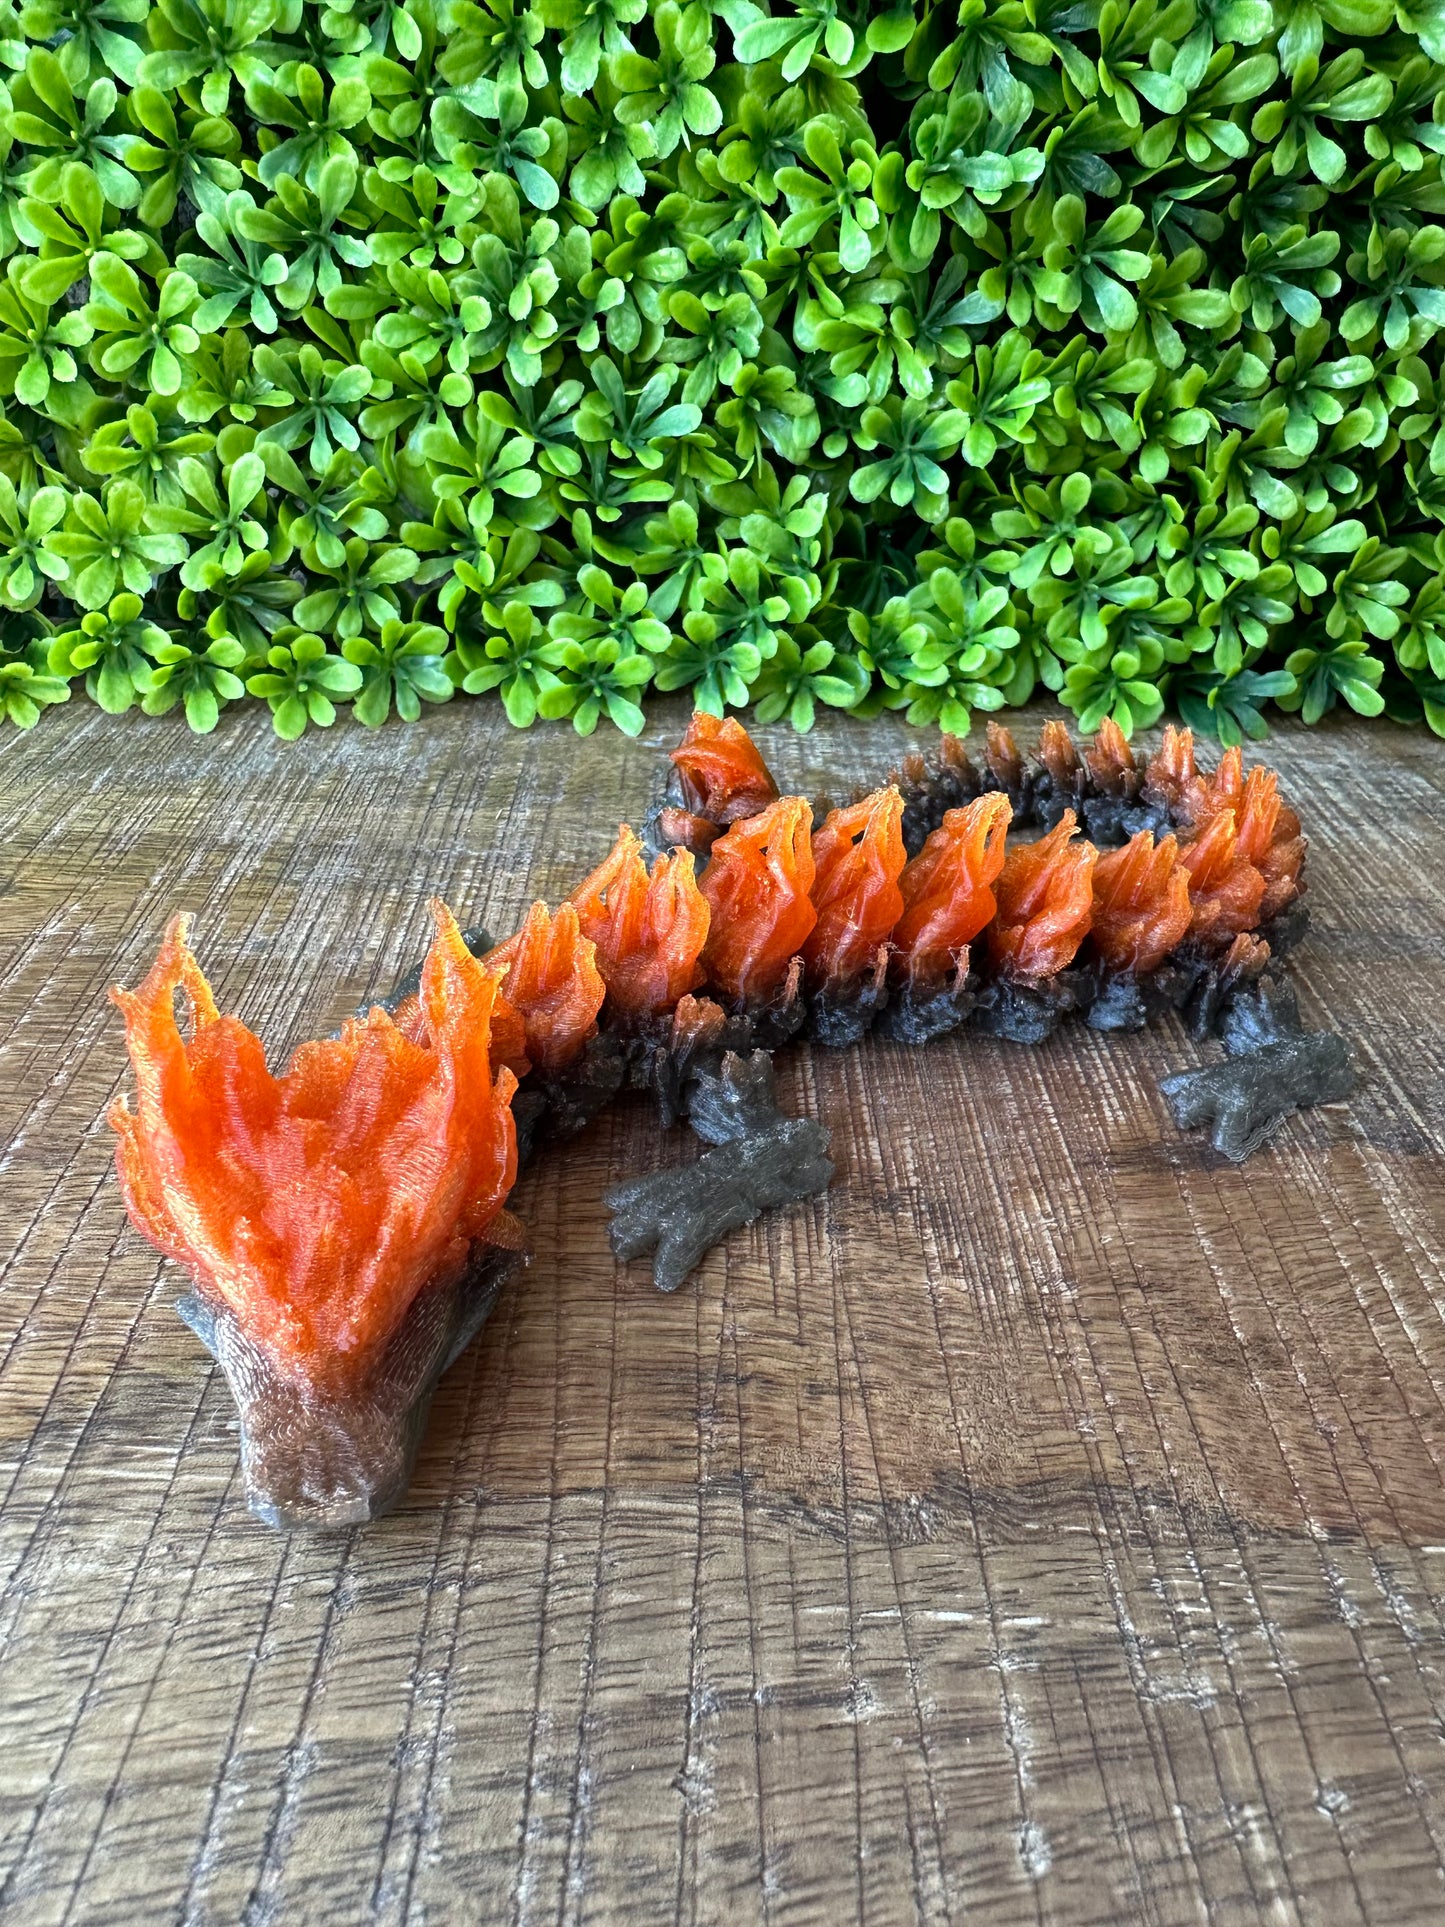 MINI Woodland Dragon | 3d Printed | Articulated Flexible | Custom Fidget Toy